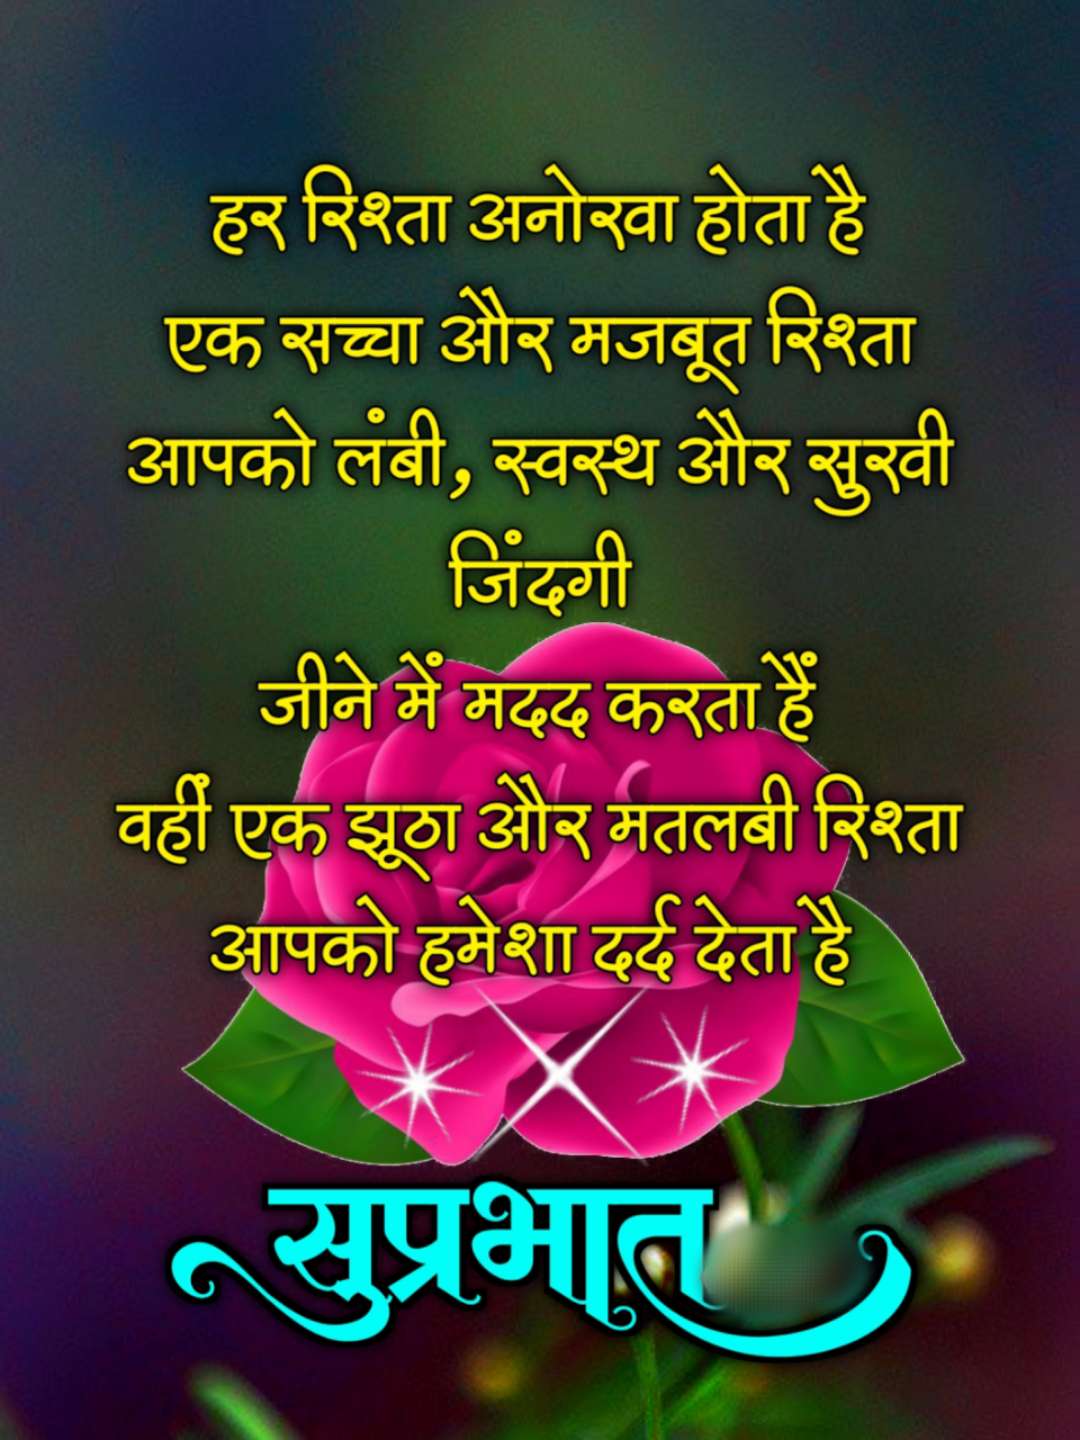 Good Morning Quotes In Hindi ()